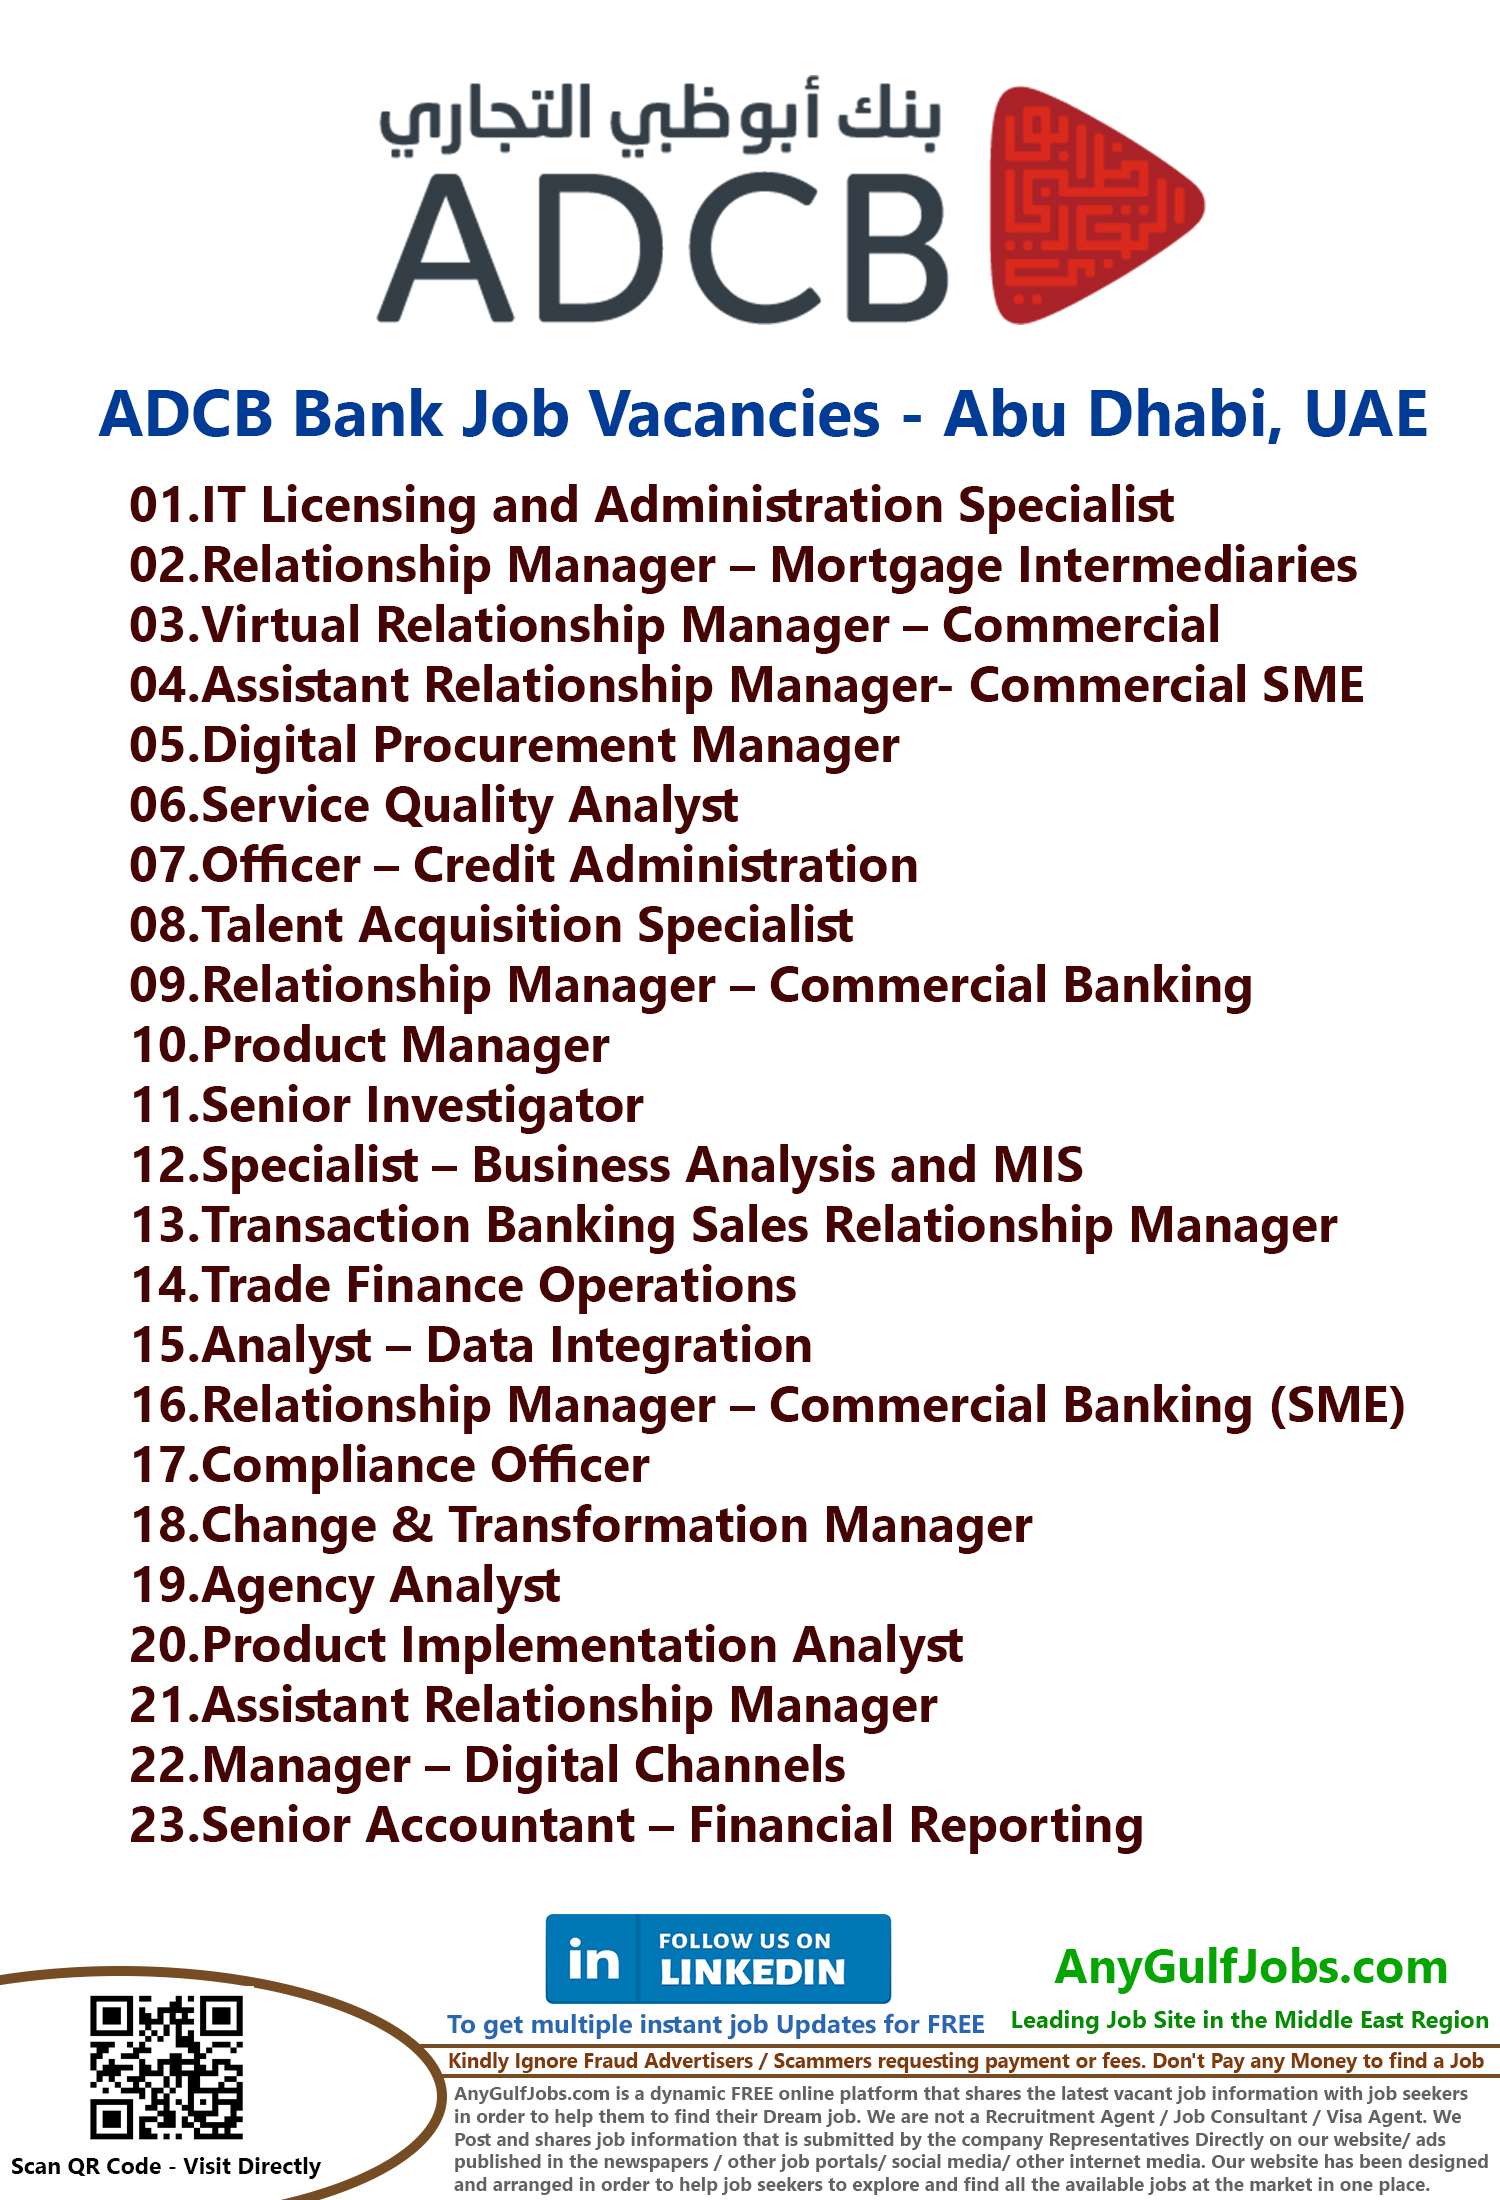 ADCB Bank Job Vacancies - Abu Dhabi, UAE